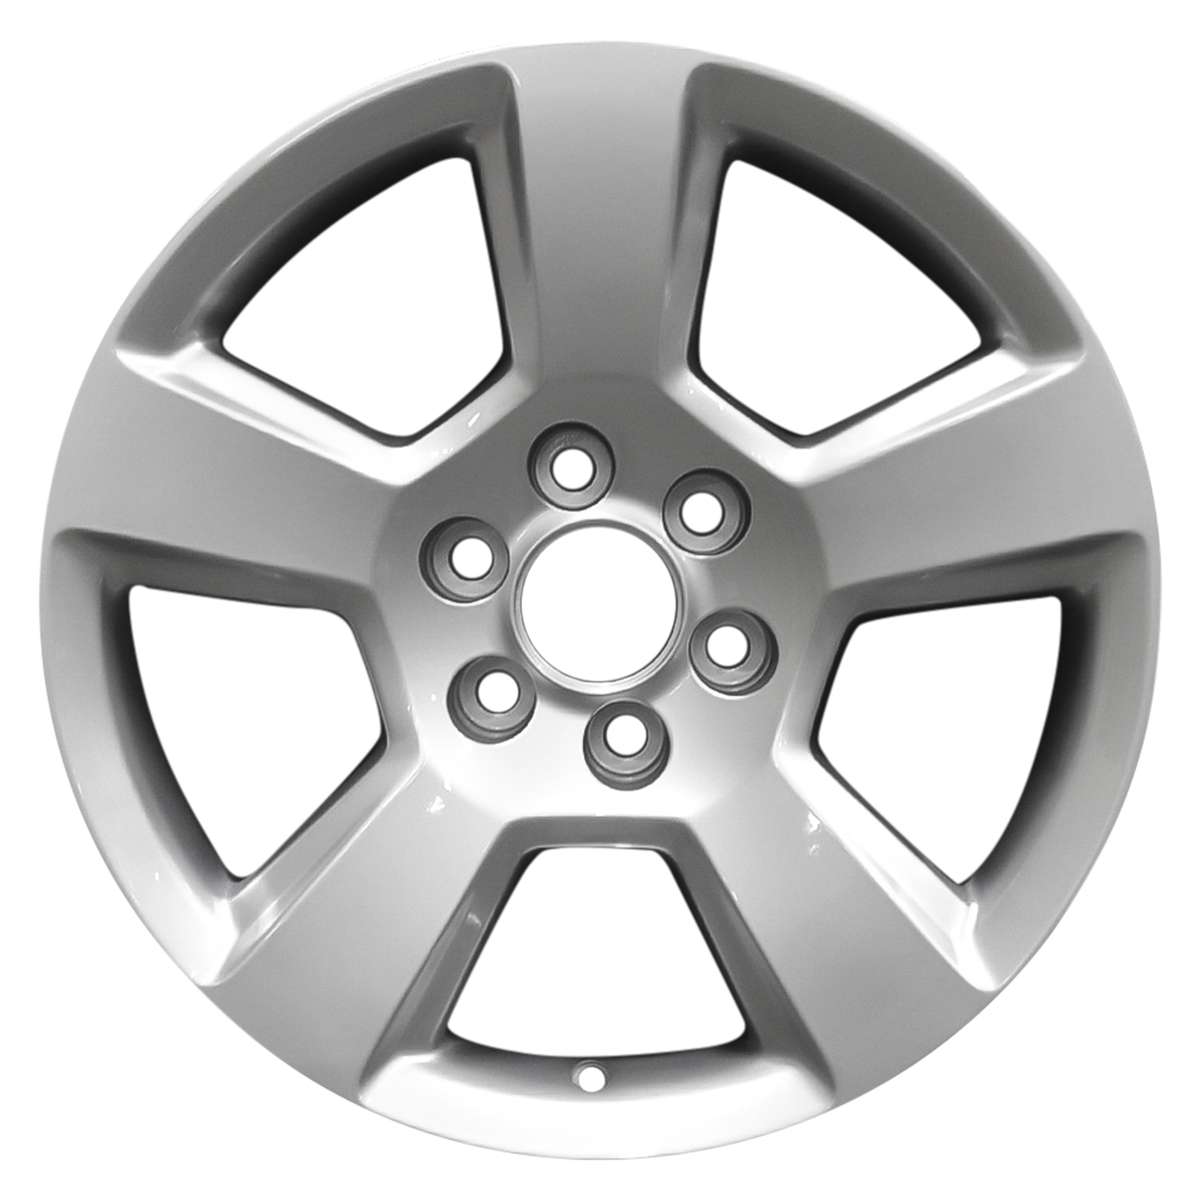 2019 Chevrolet Suburban 1500 20" OEM Wheel Rim W5754S